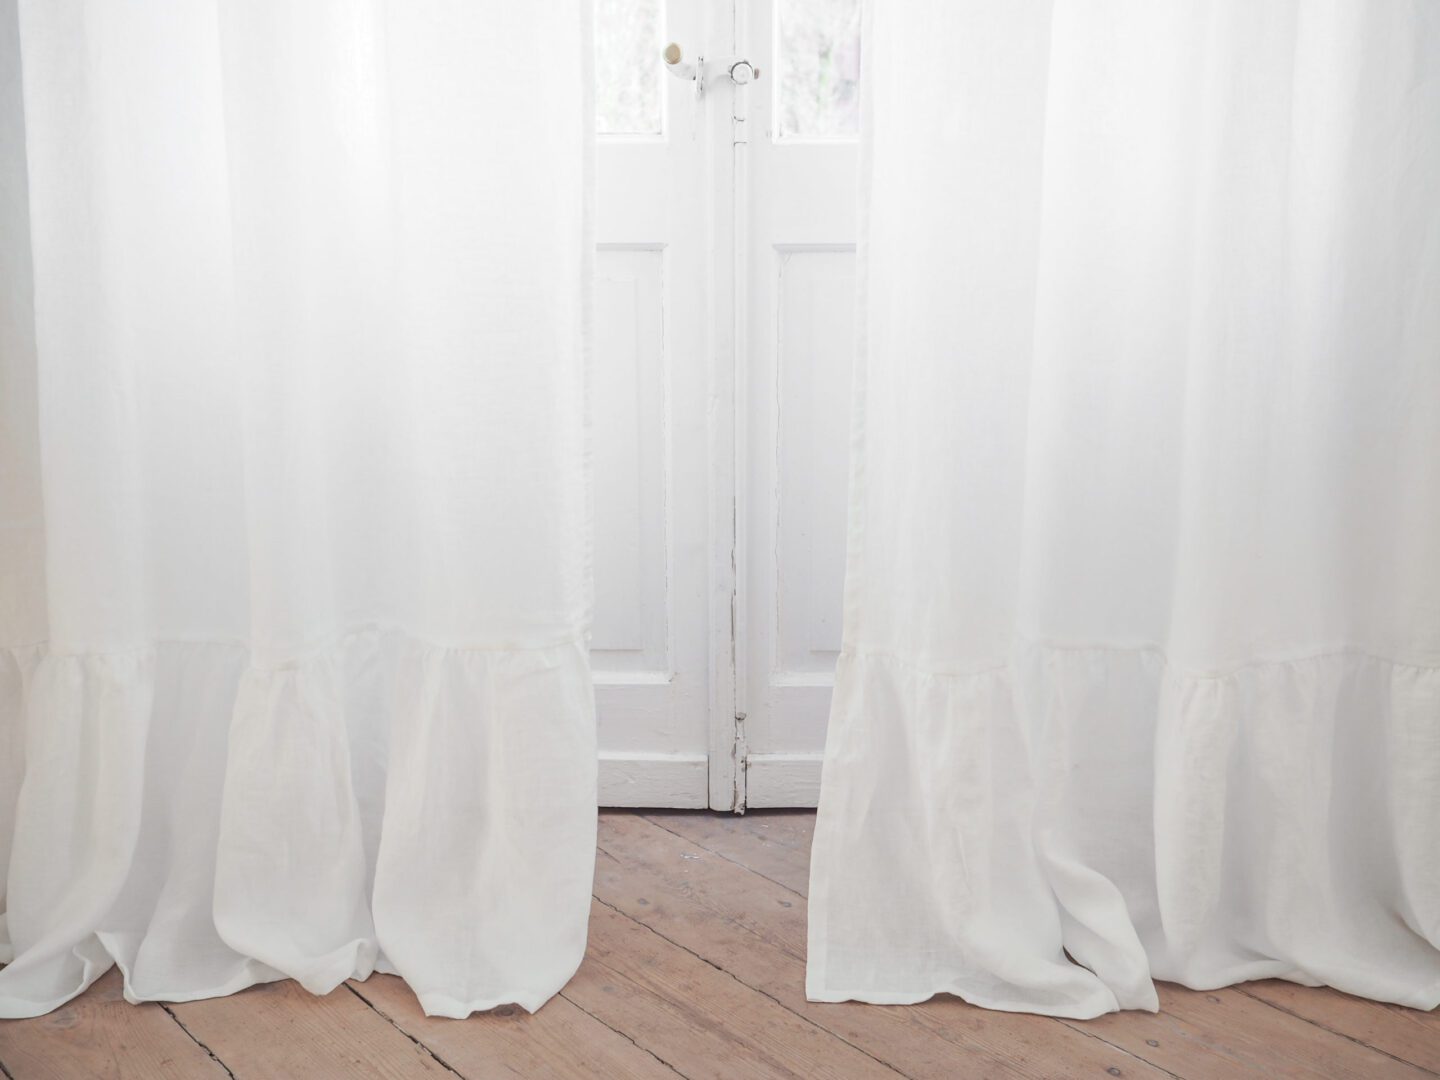 Semi sheer white linen curtains